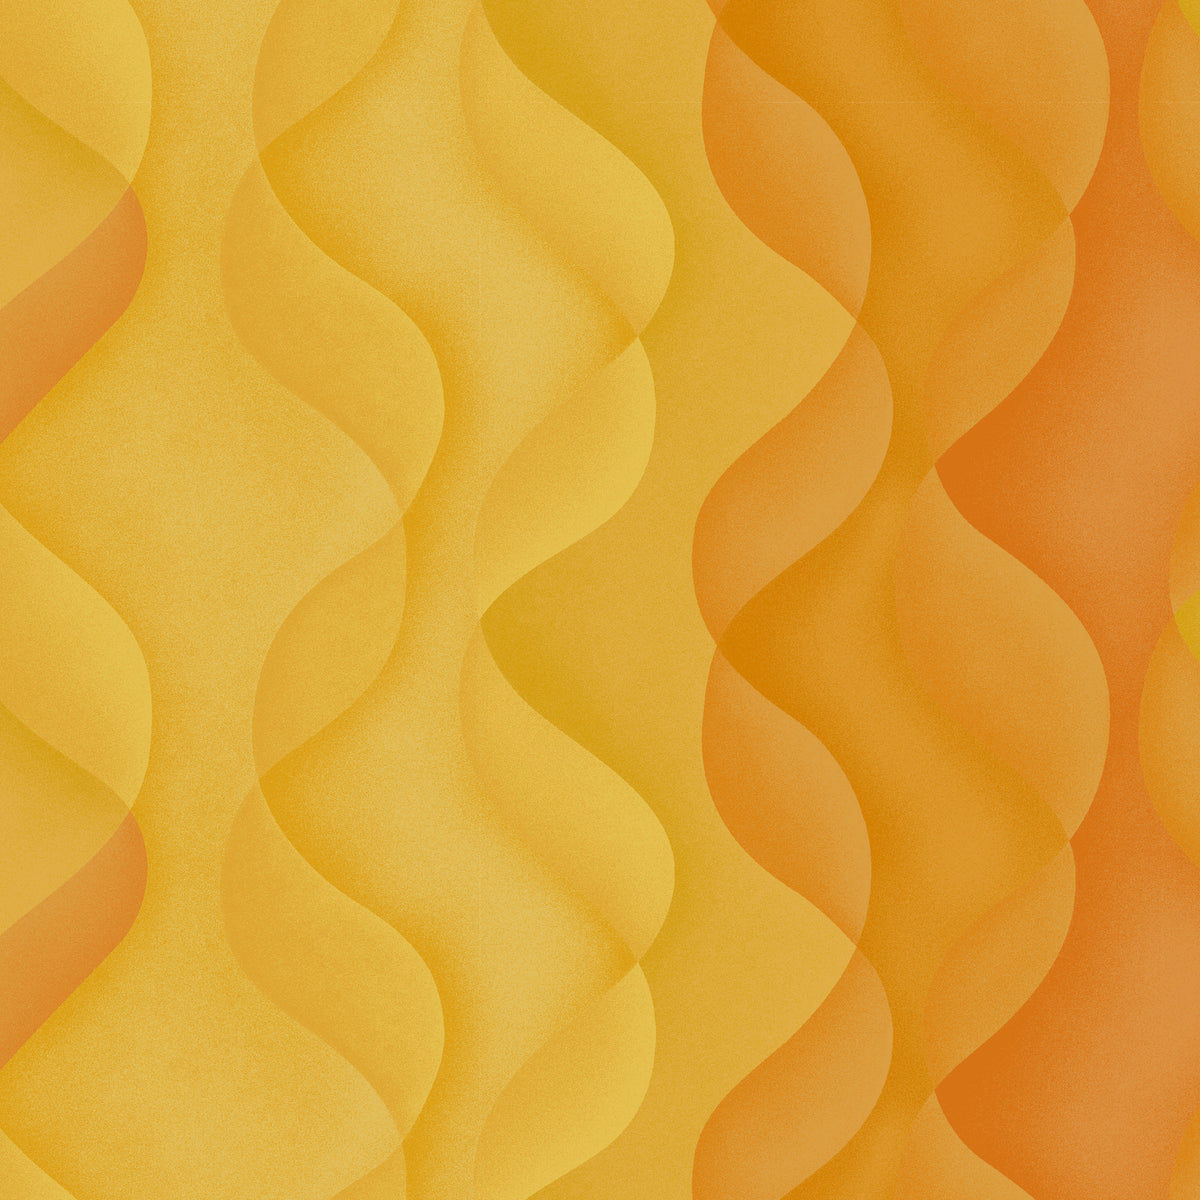 Playa Quilt Fabric - Dunes in Orange - JB600-OR7